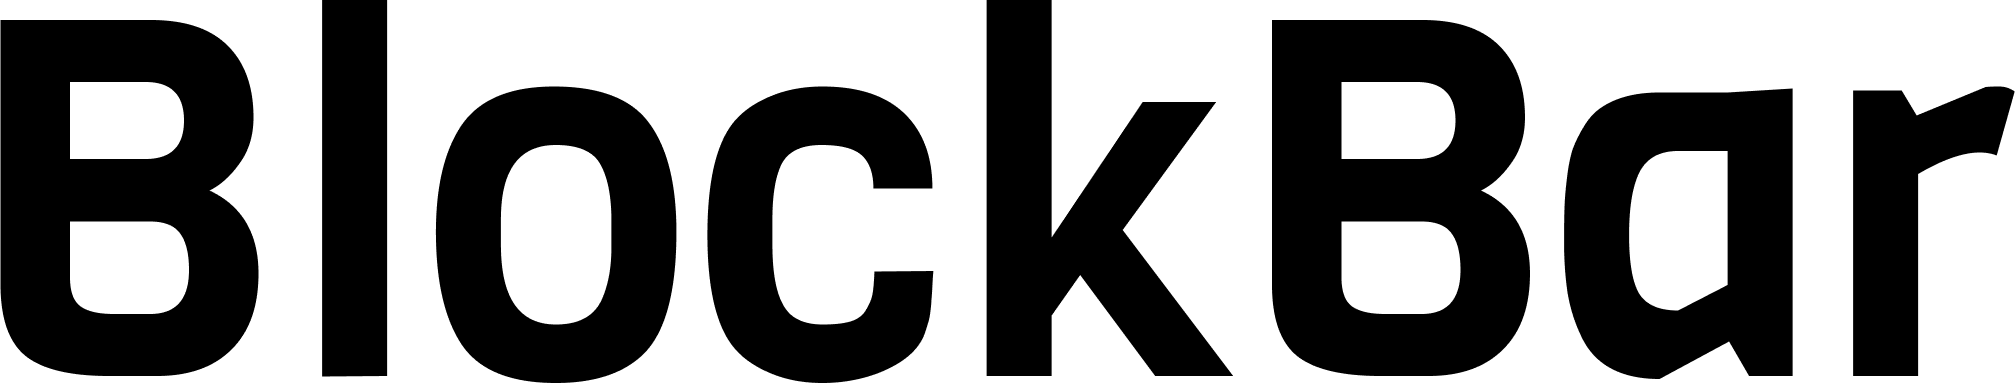 block-bar-logo